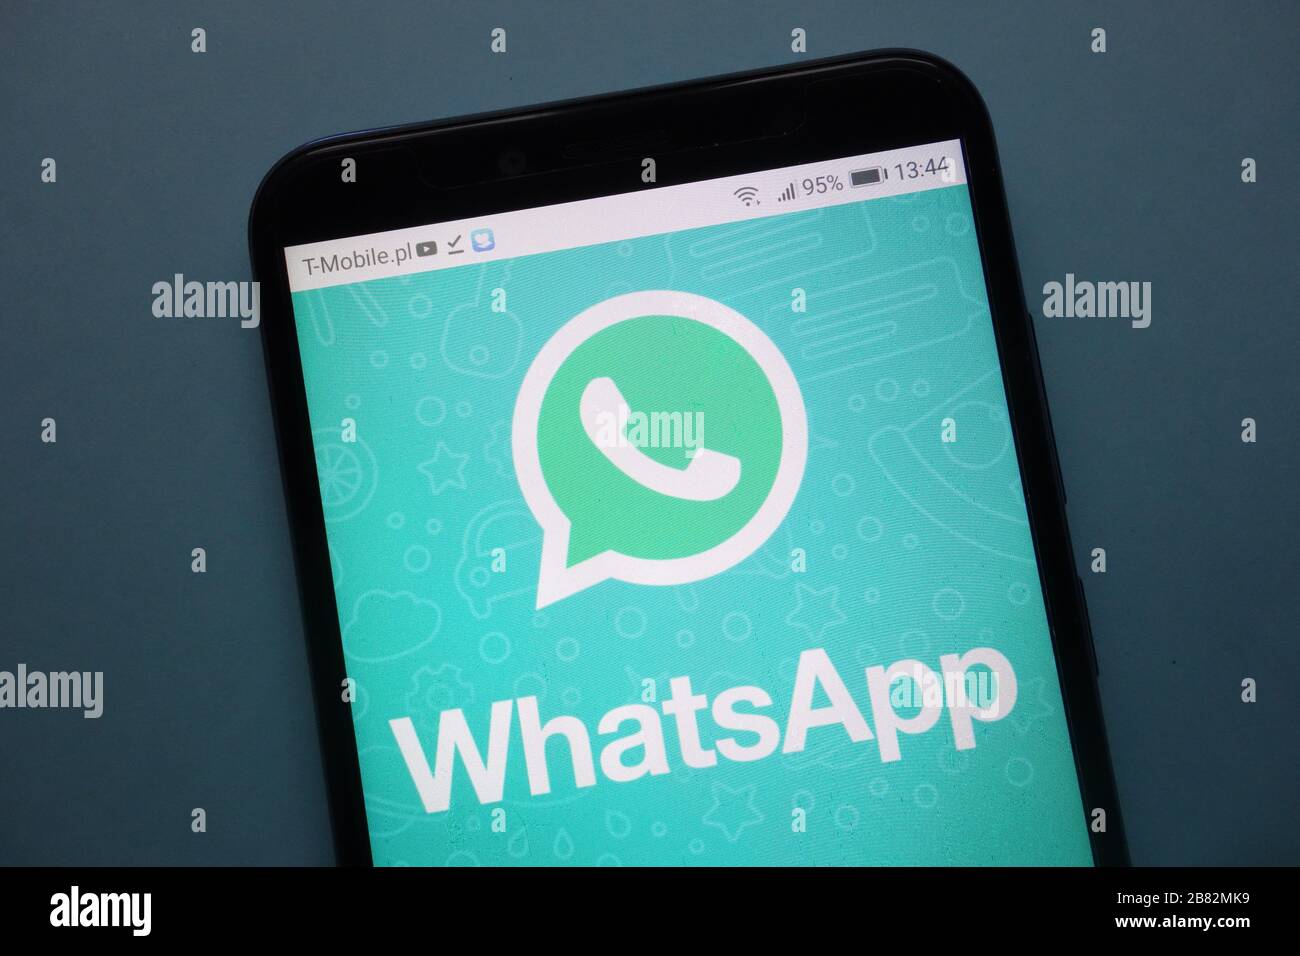 WhatsApp Messenger logo displayed on smartphone Stock Photo